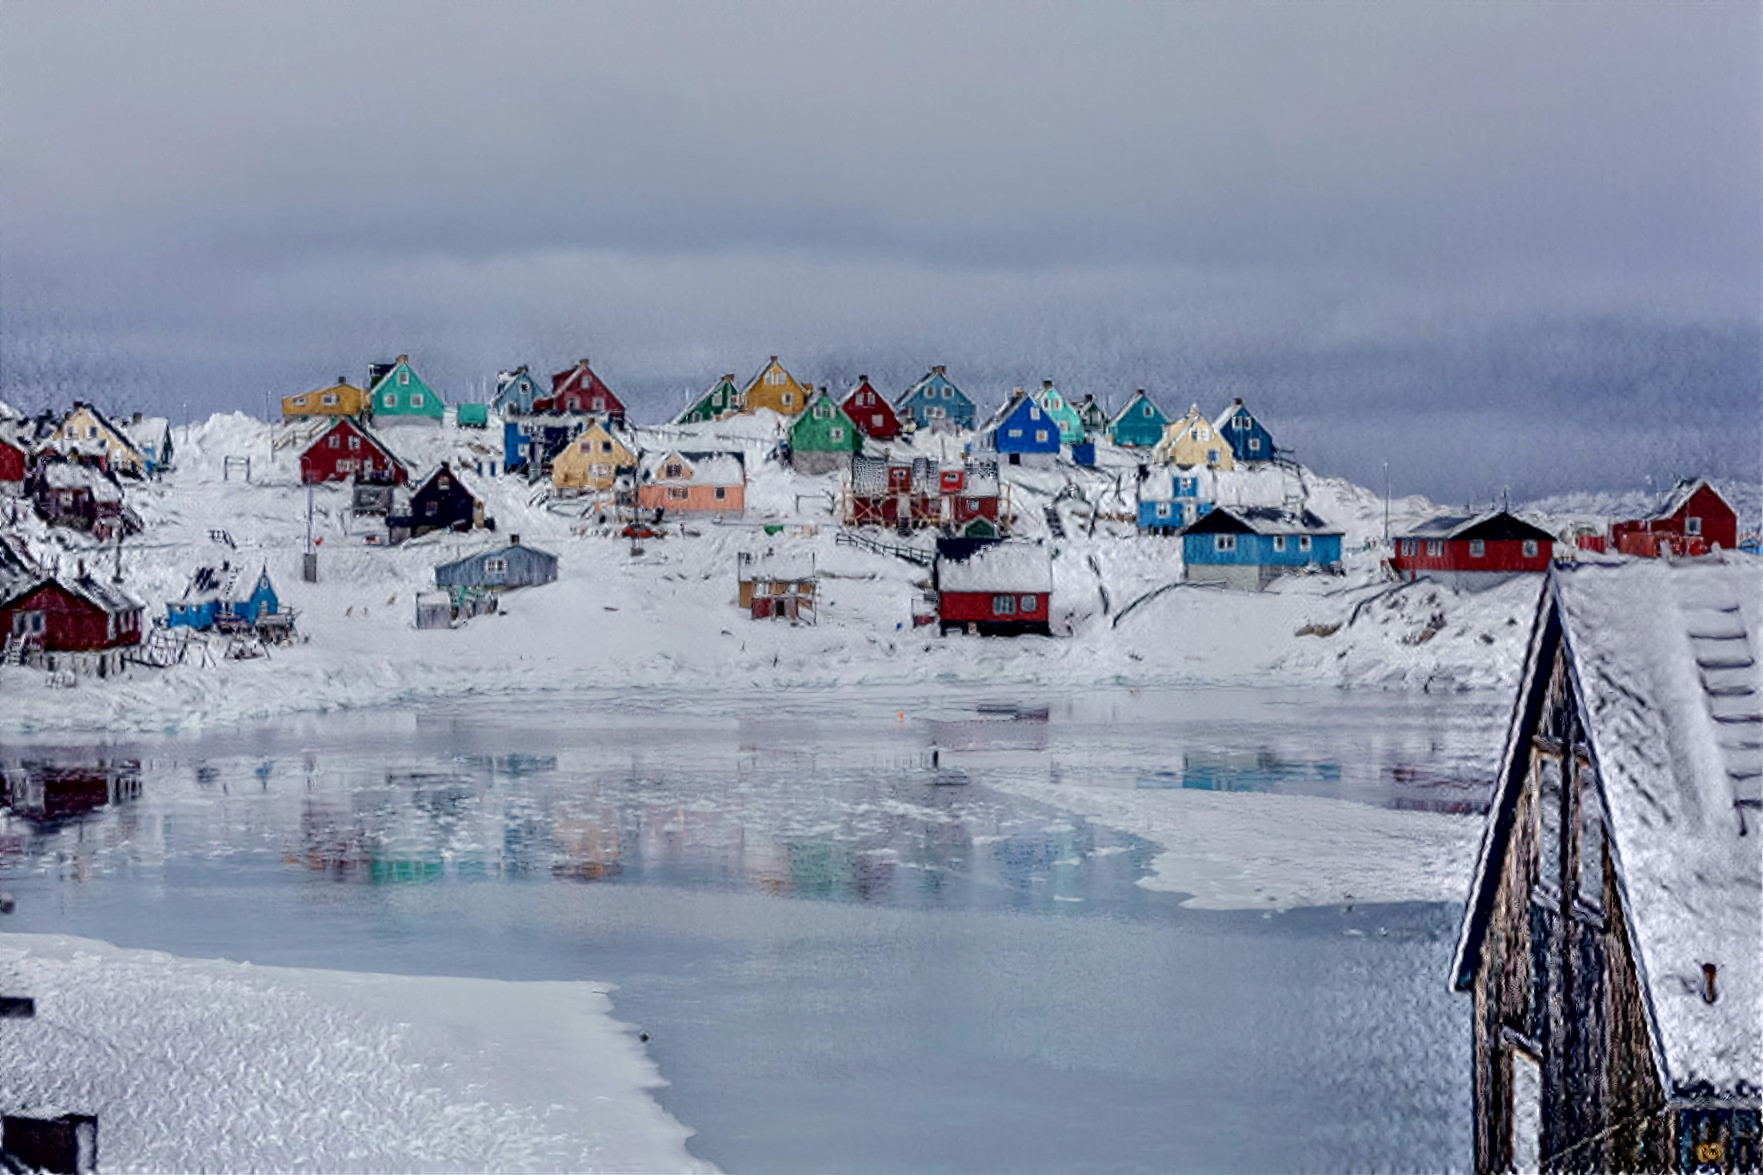 A Long Winter of Aasiaat, Greenland. Original image by Filip Gielda.